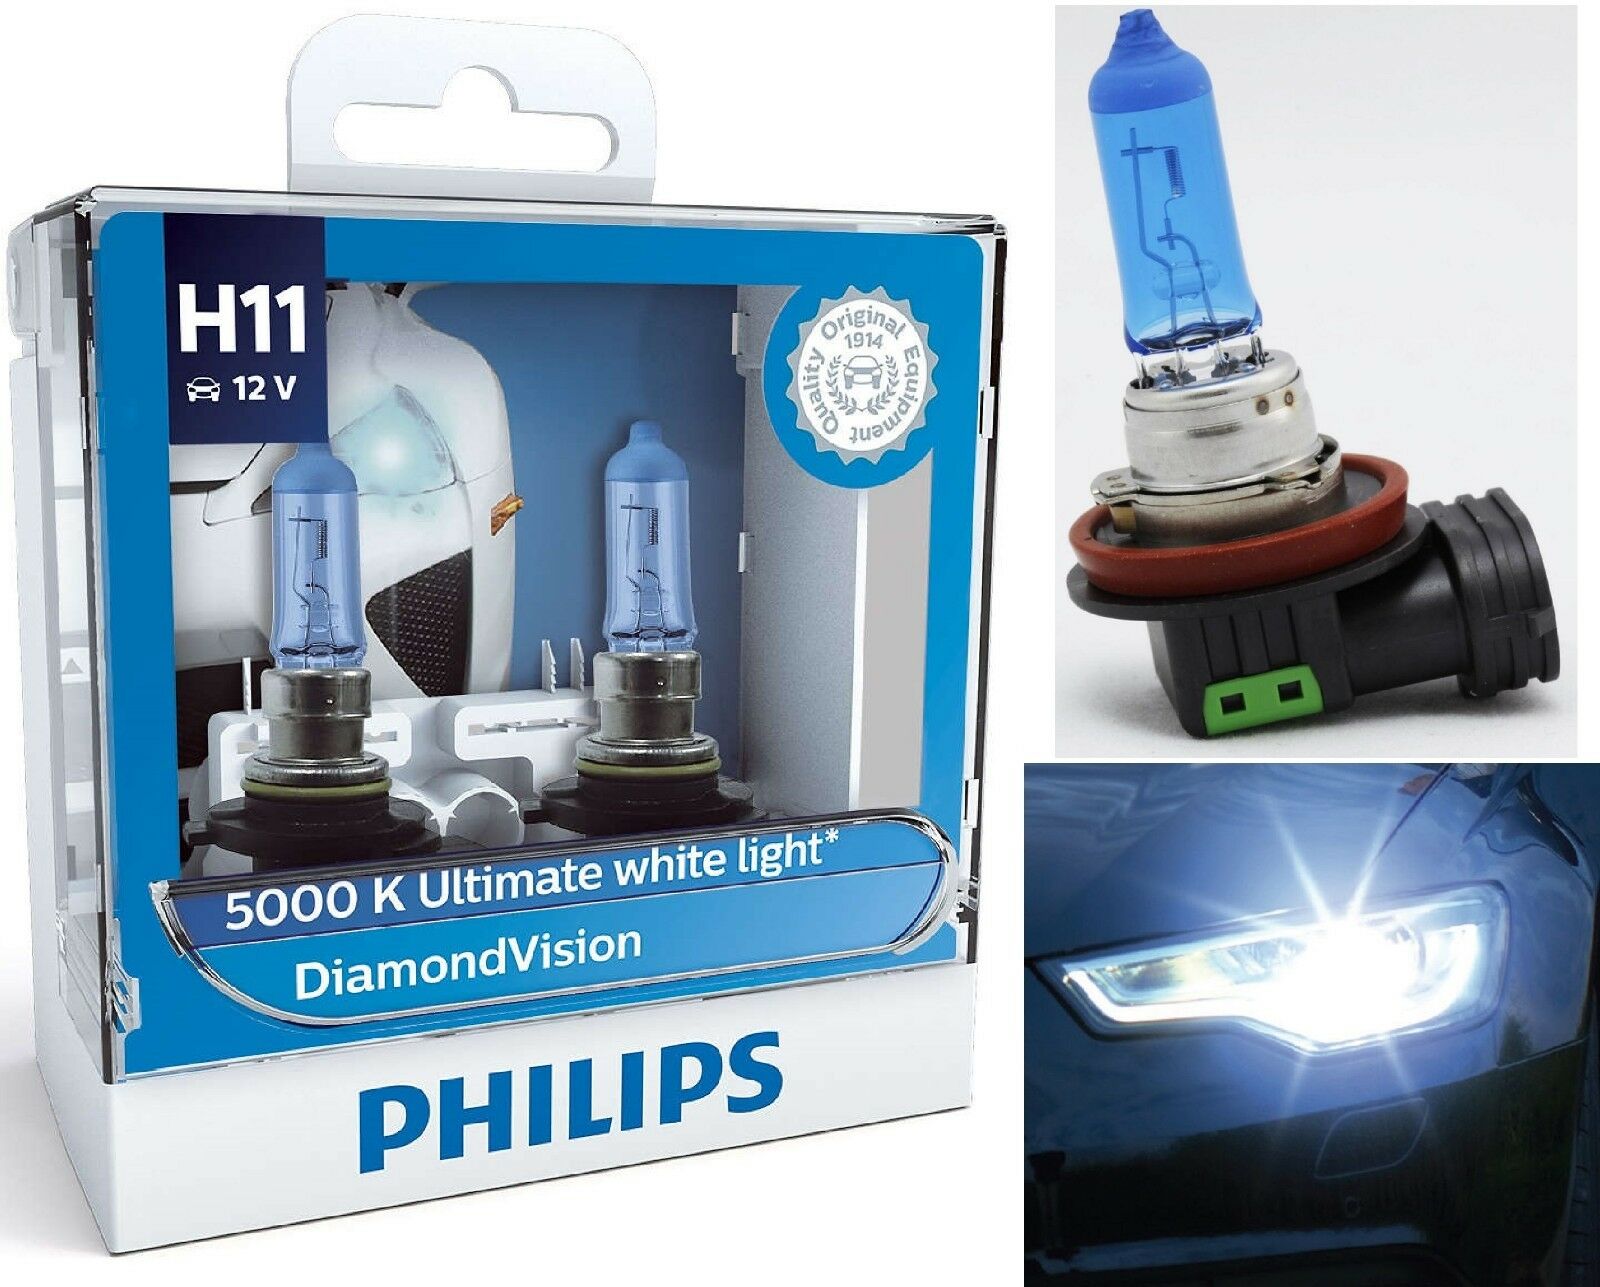 Phillips Diamond Vision